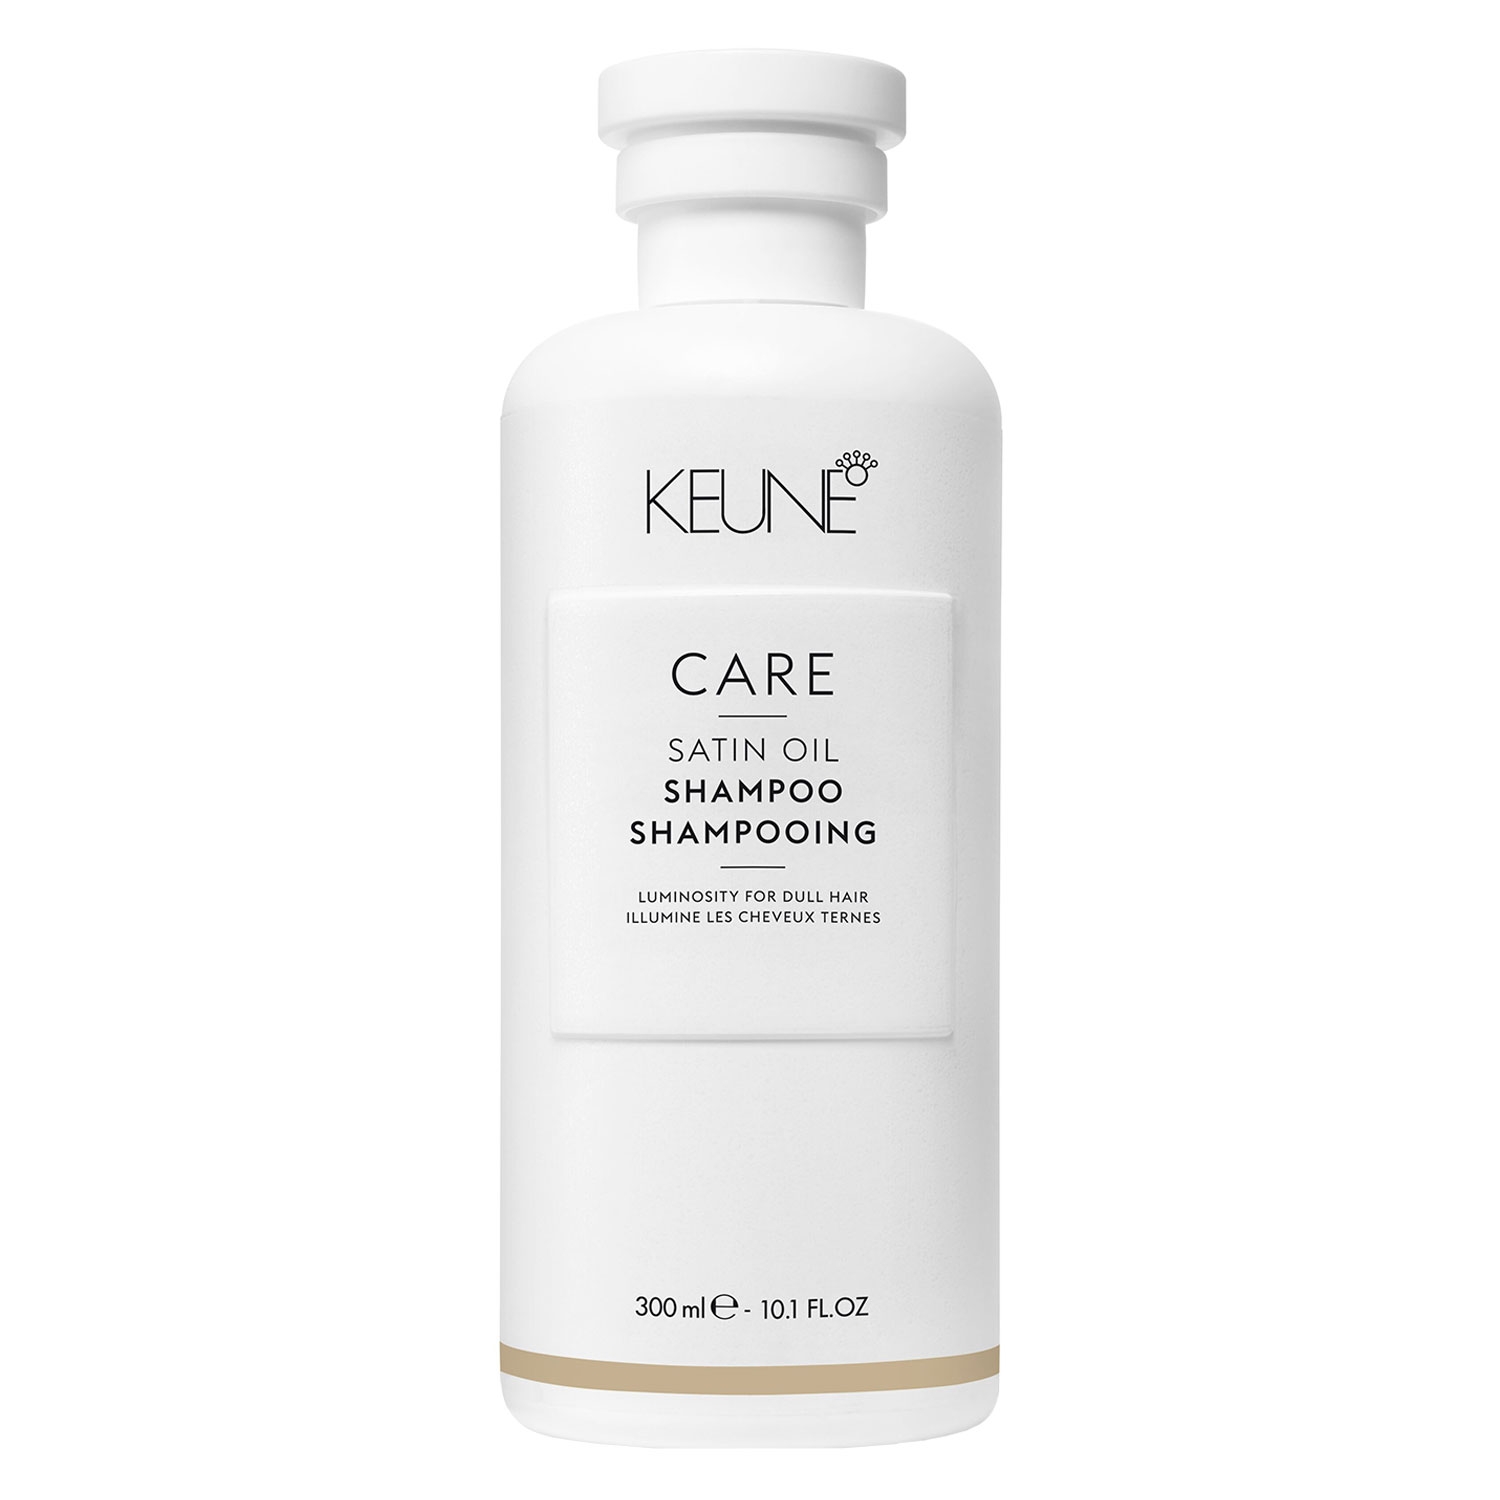 Produktbild von Keune Care - Satin Oil Shampoo